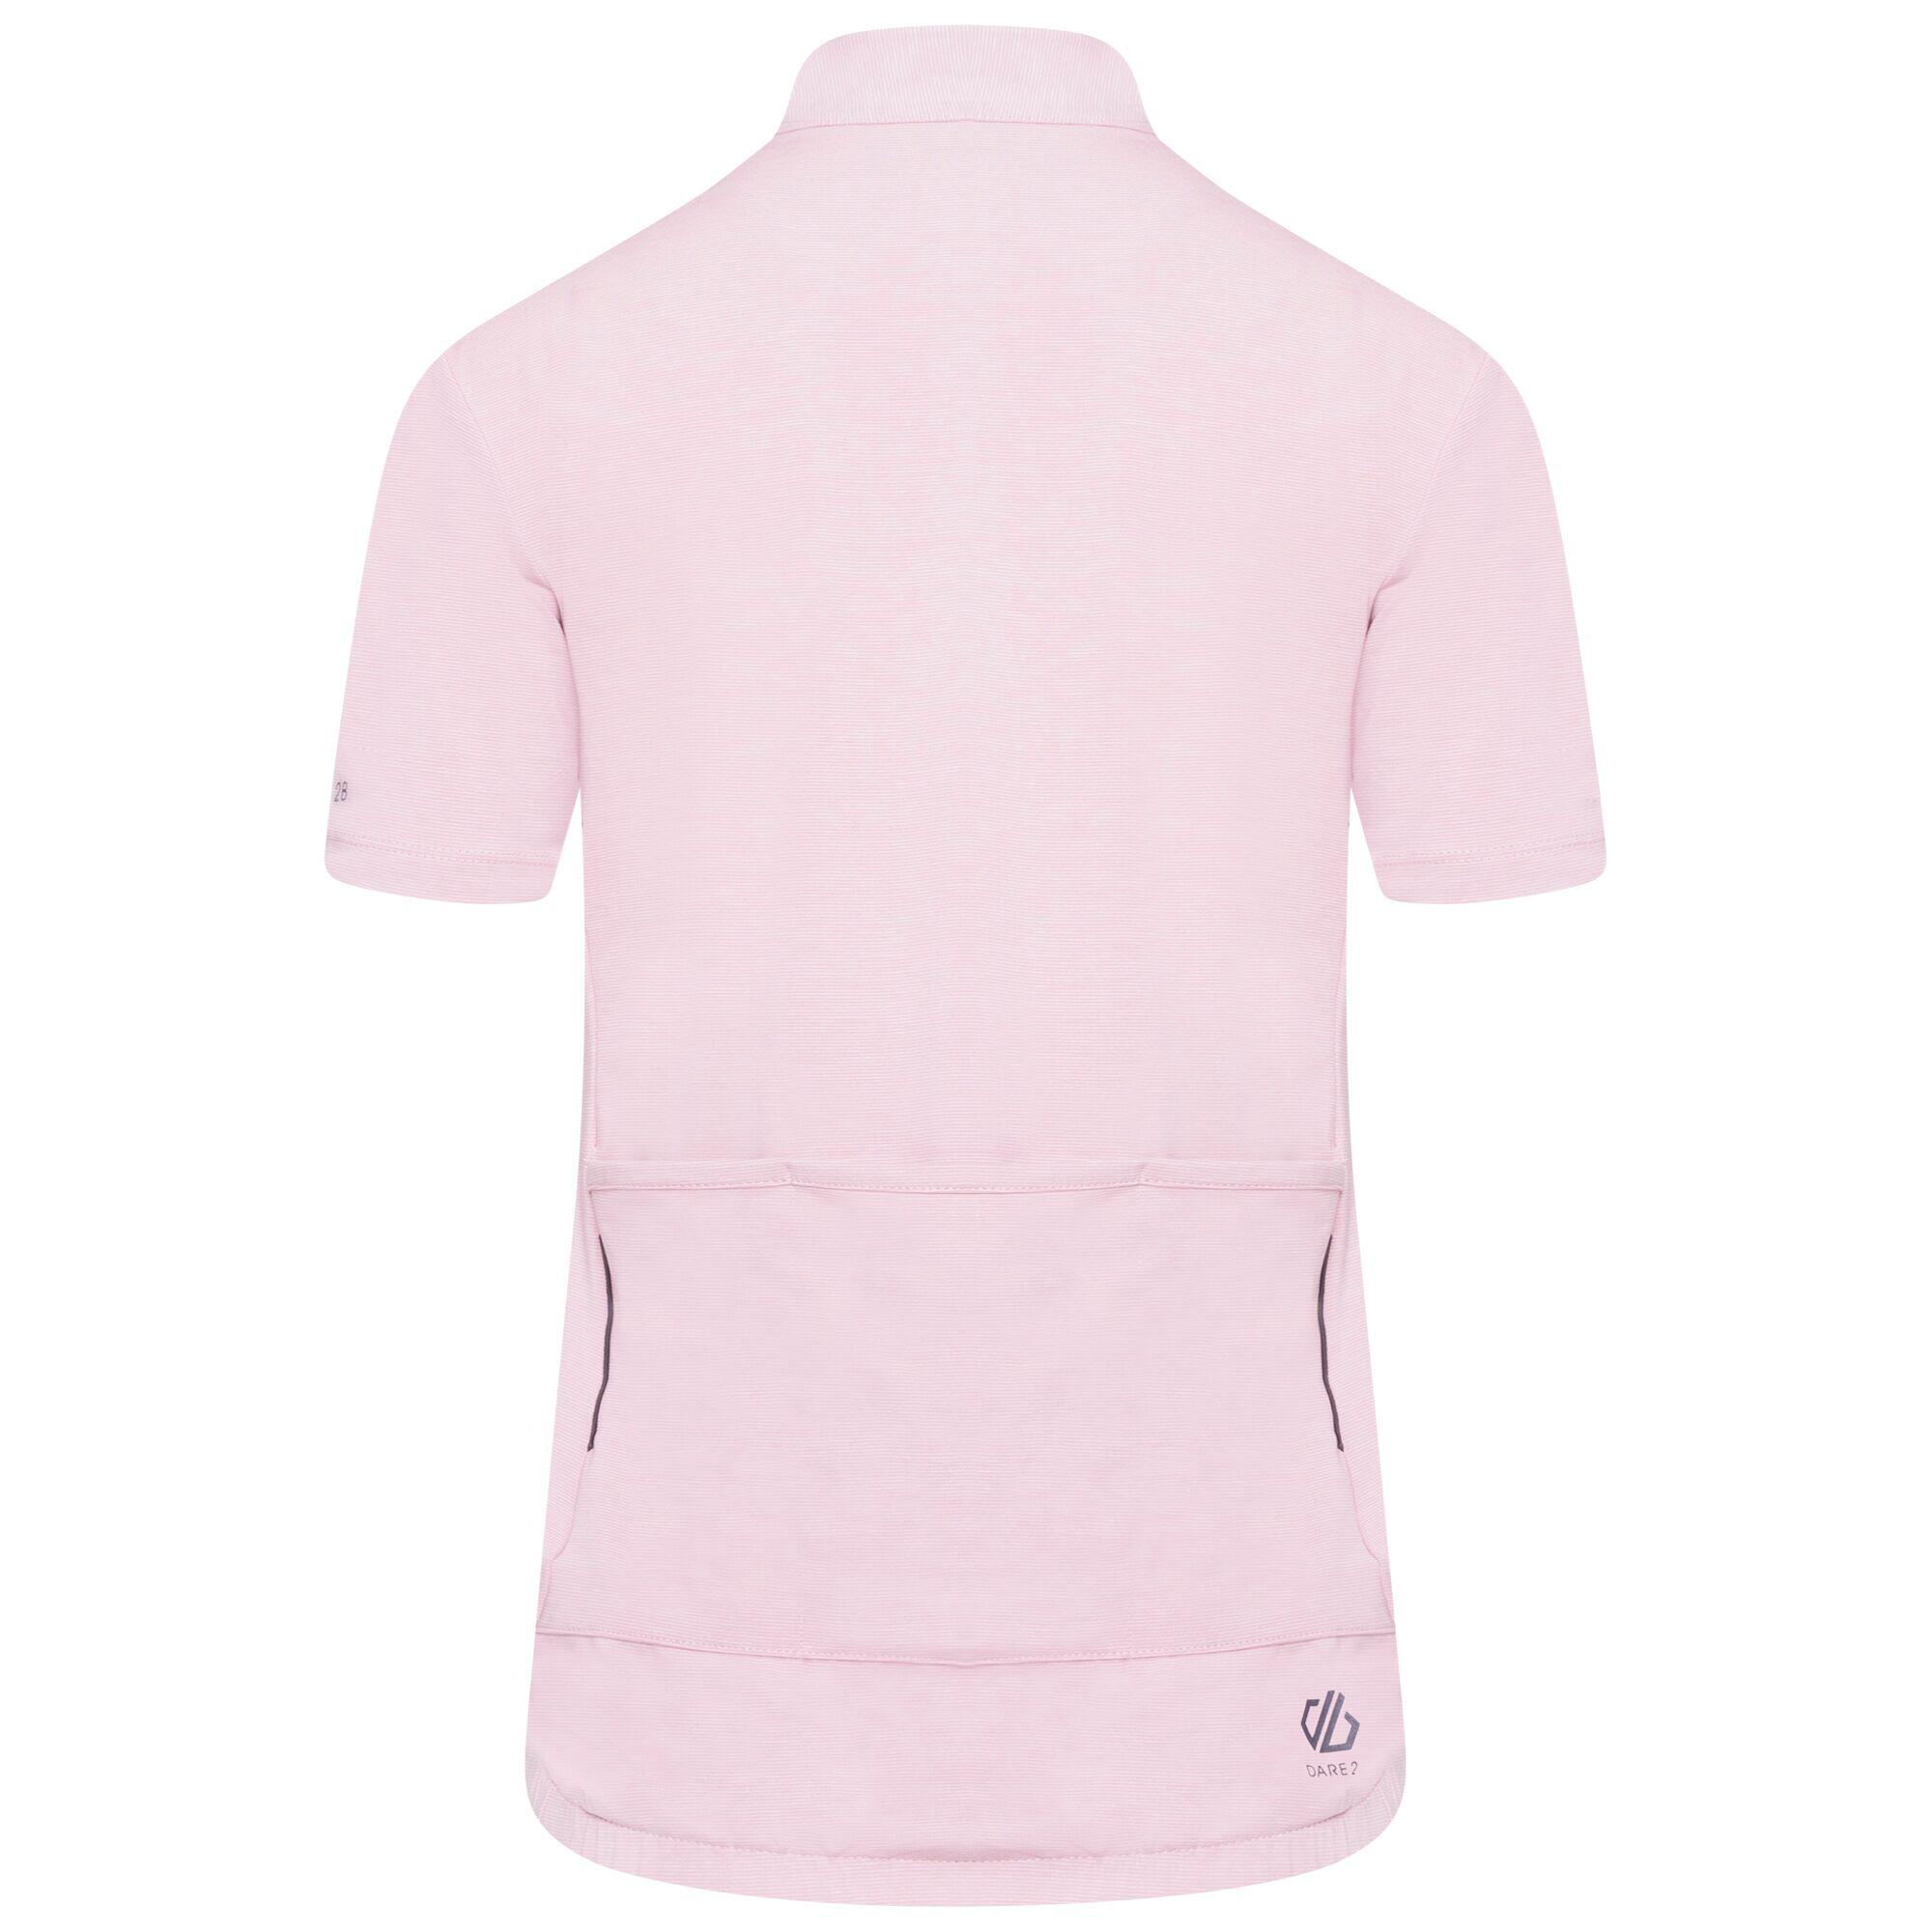 Womens/Ladies Pedal Through It Marl Lightweight Jersey (Powder Pink) 2/5